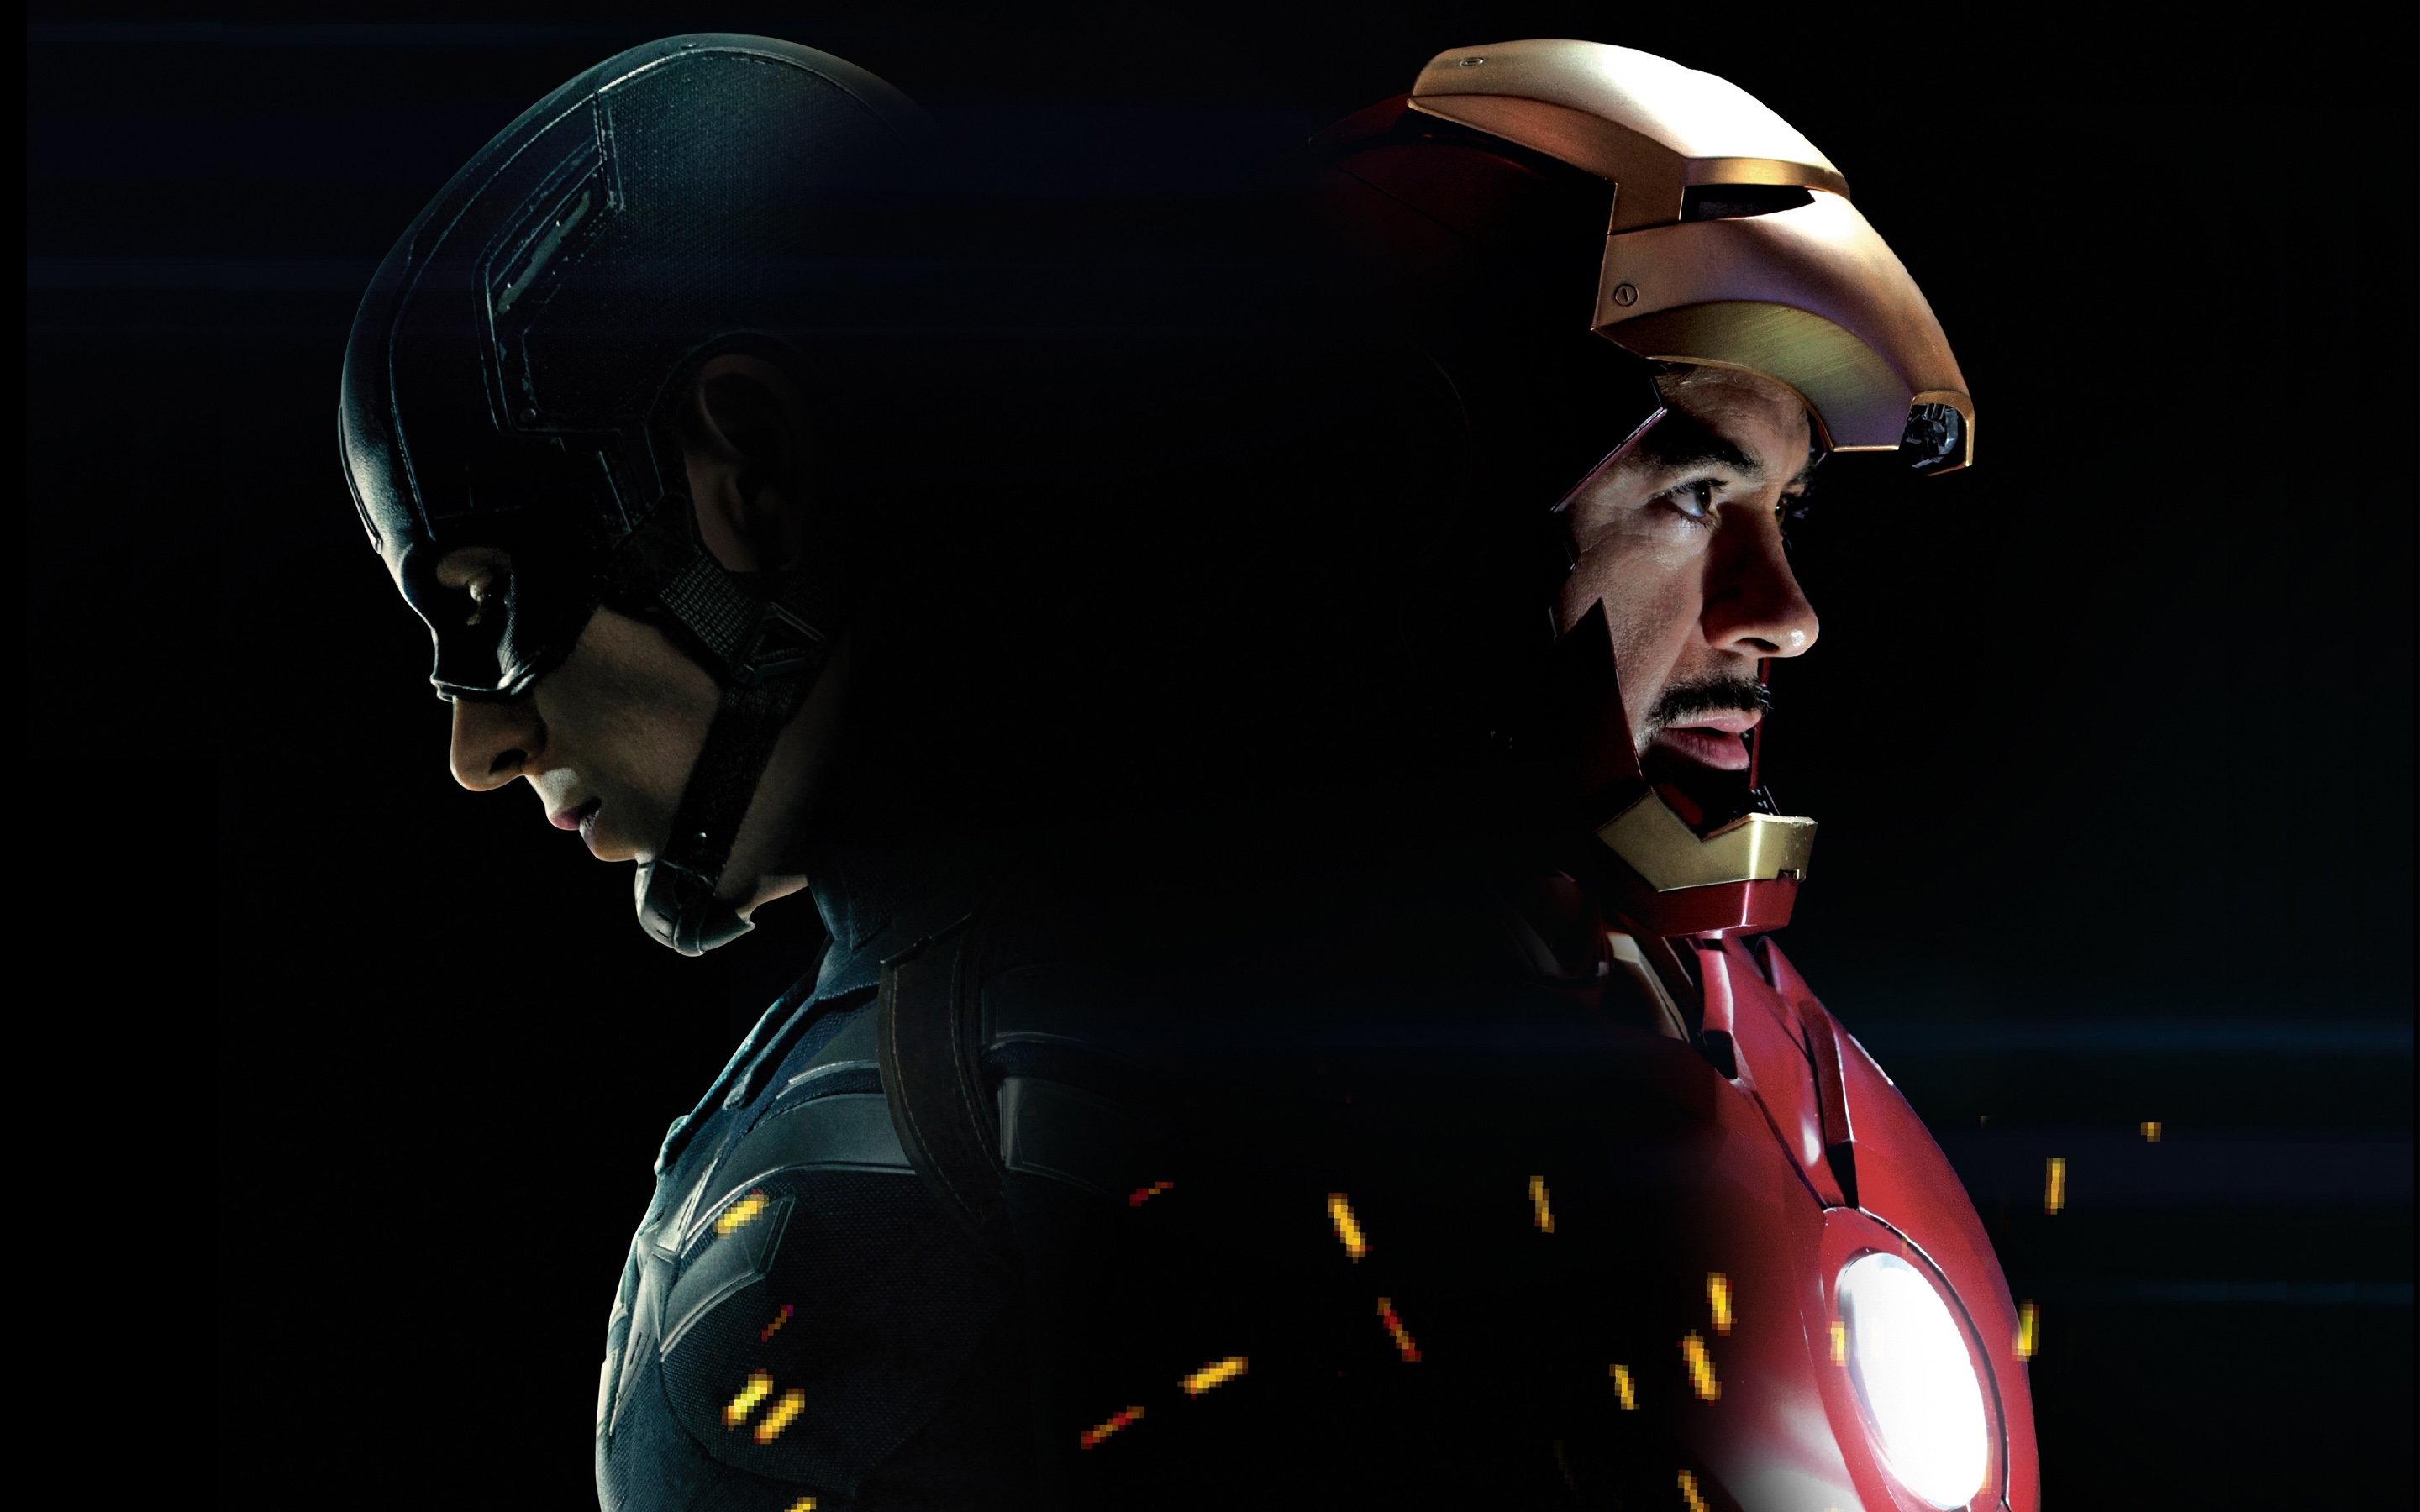  download Captain America 3 Civil War Iron Man Wallpapers HD 2880x1800